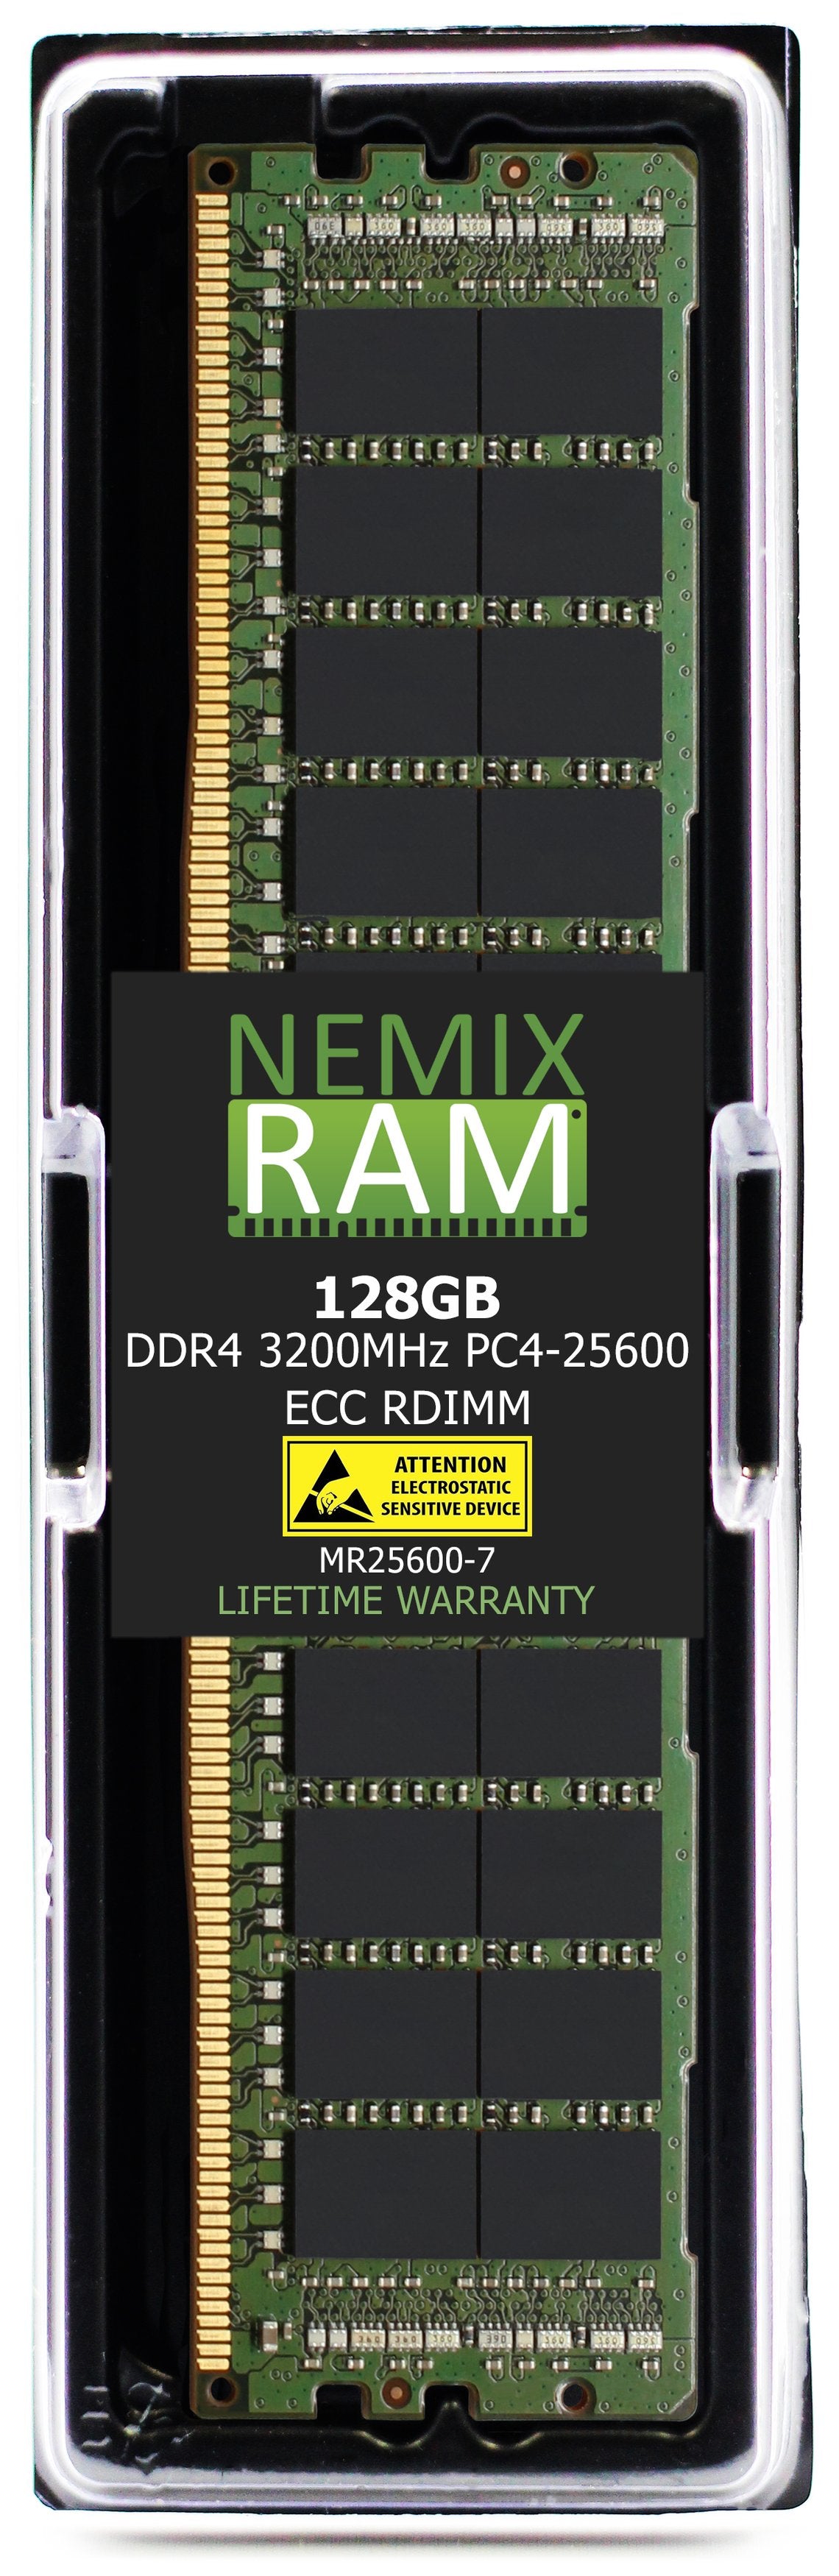 128GB DDR4 3200MHZ PC4-25600 RDIMM Compatible with Supermicro MEM-DR412L-HL01-ER32